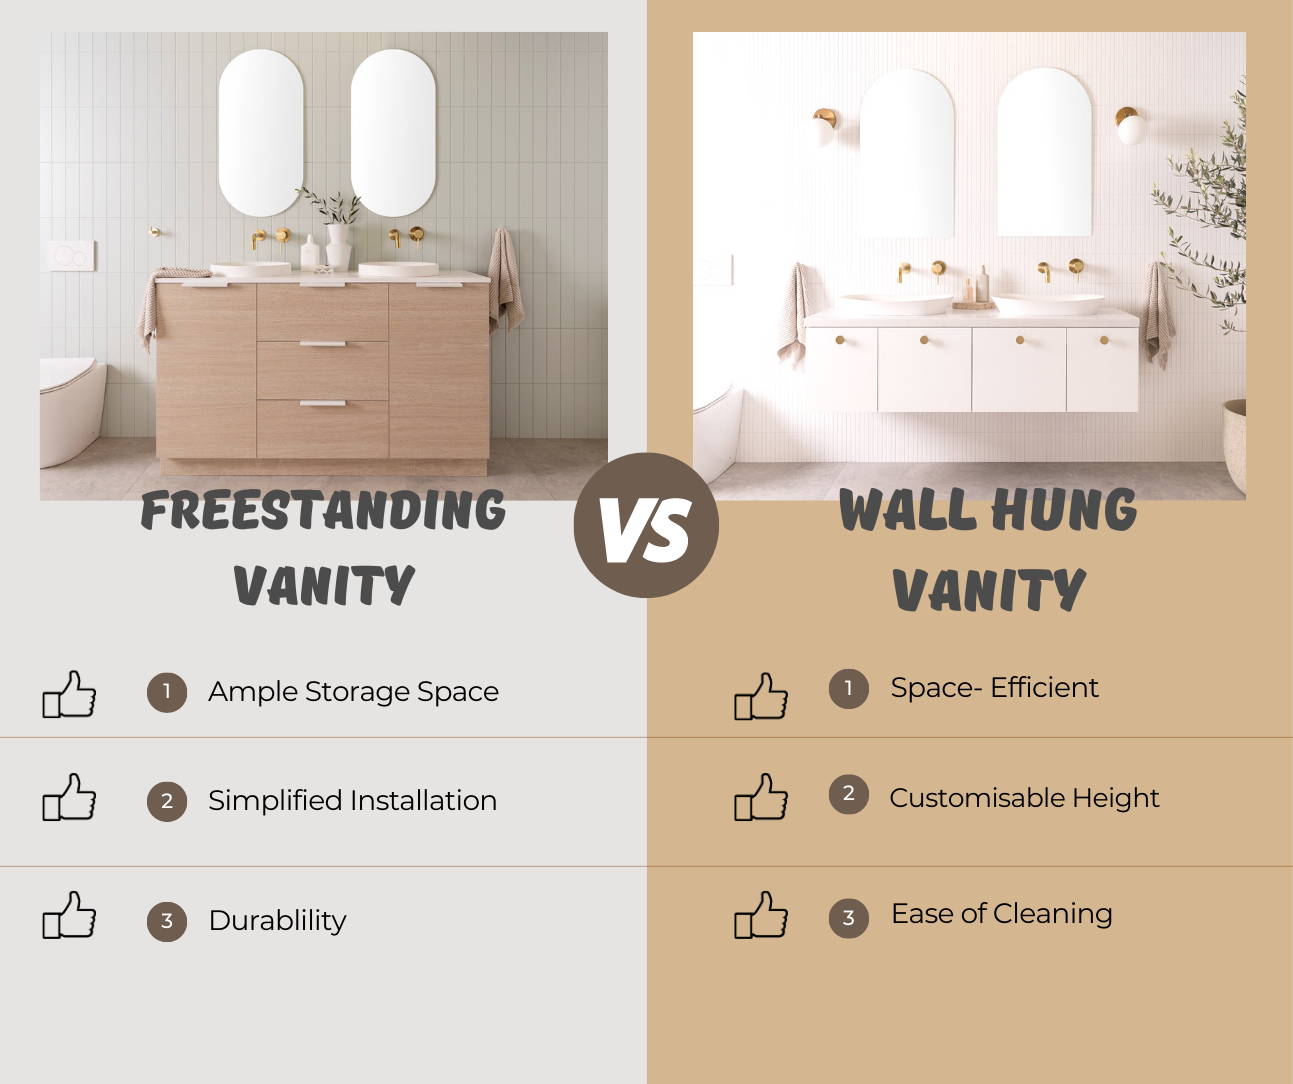 Wall hung vanity vs freestanding